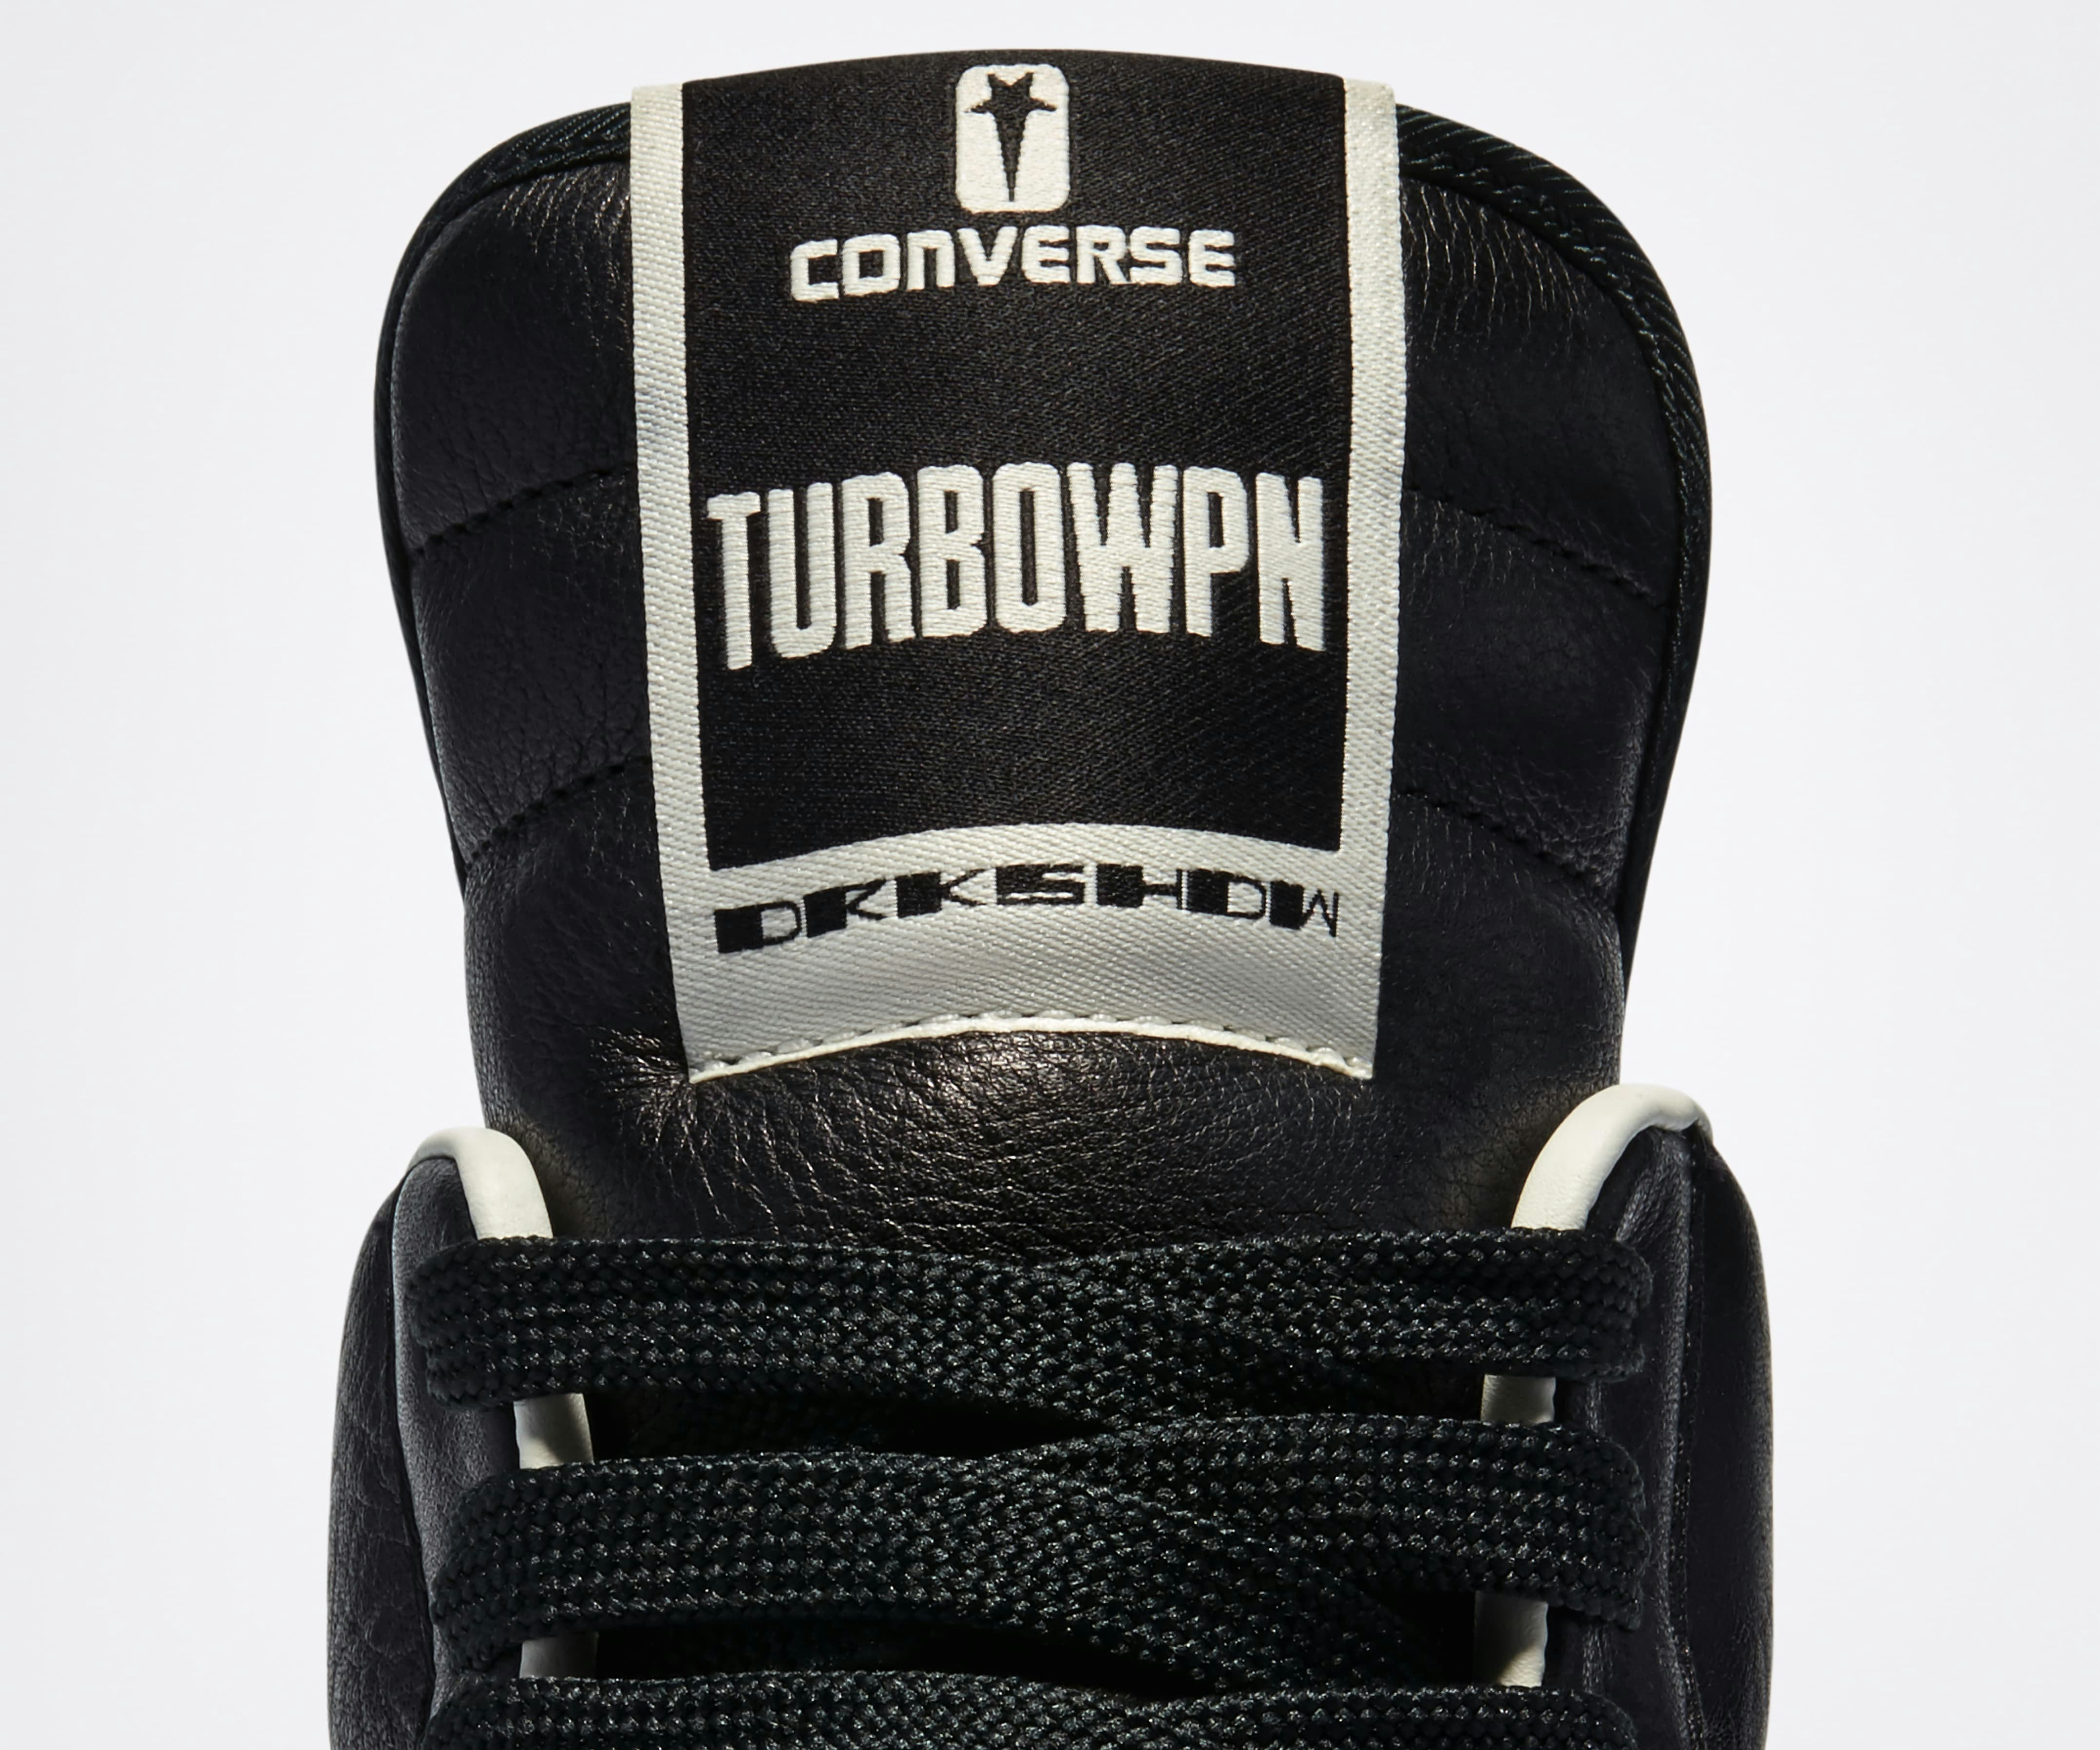 Rick Owens x Converse Turbown Ox "DRKSDW"